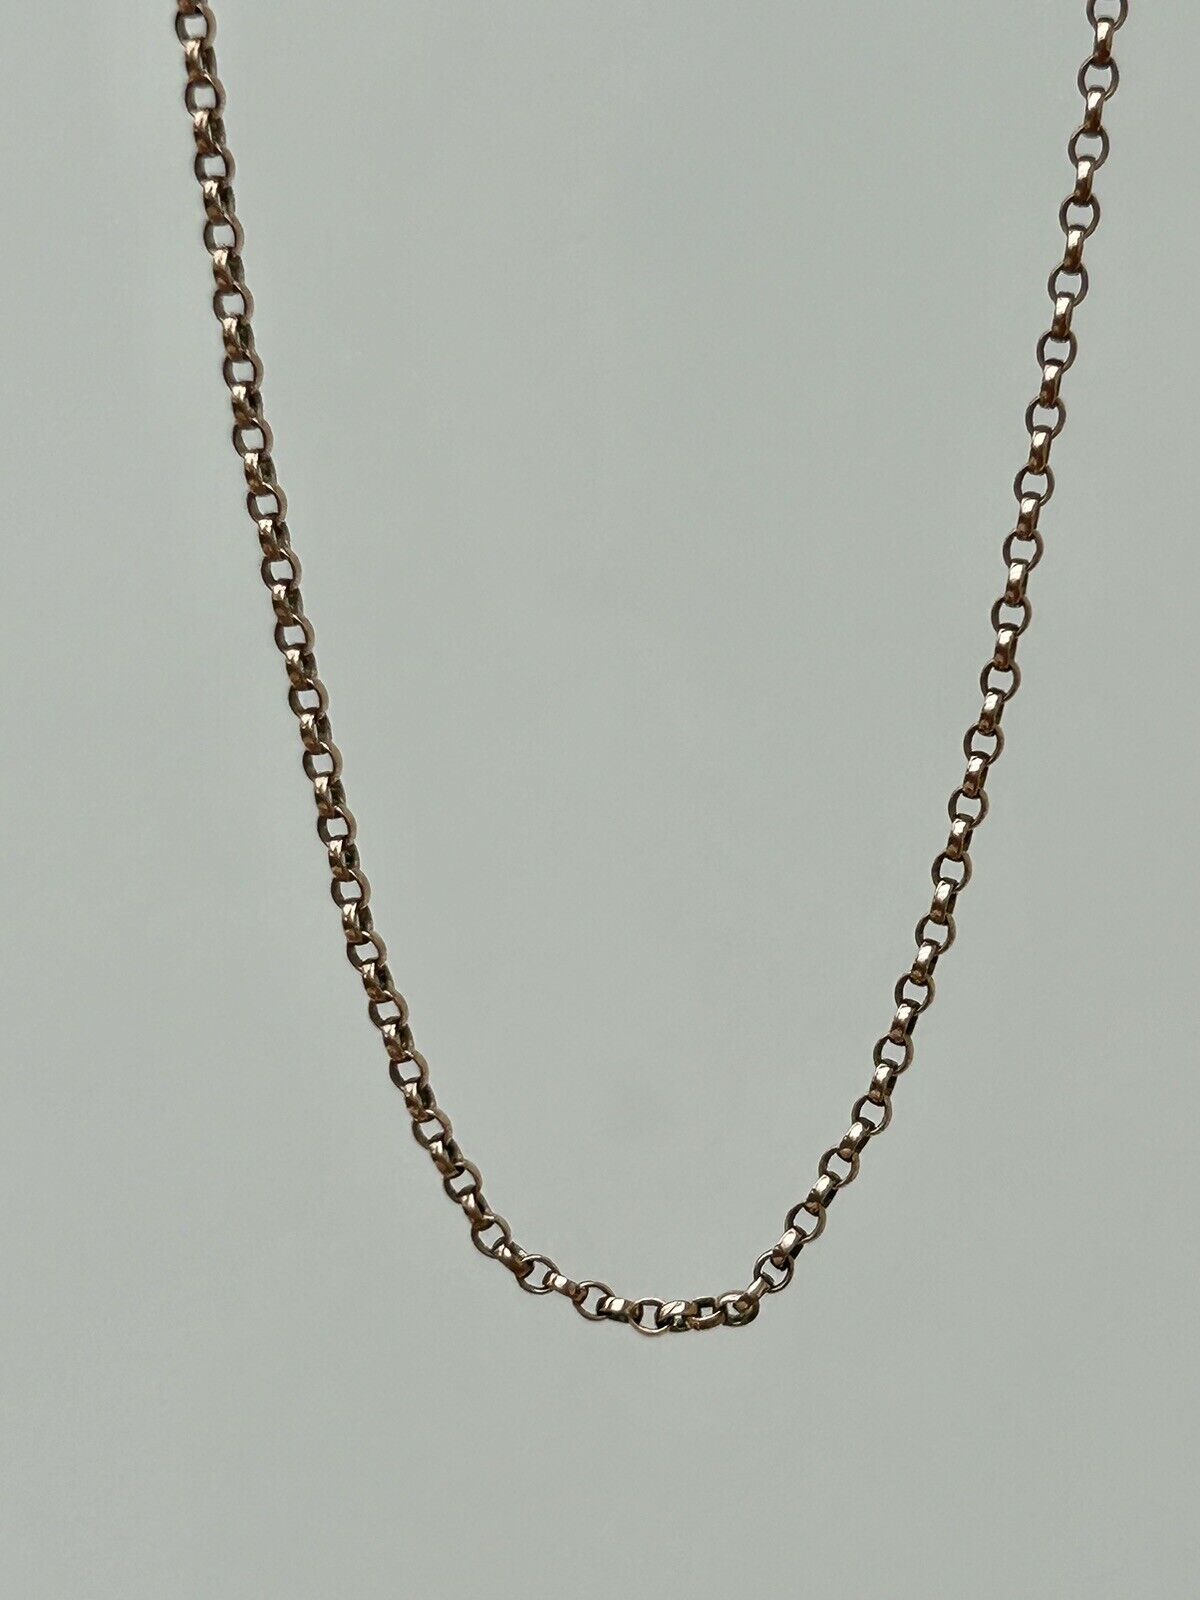 Antique 9ct Gold Long Chain Necklace